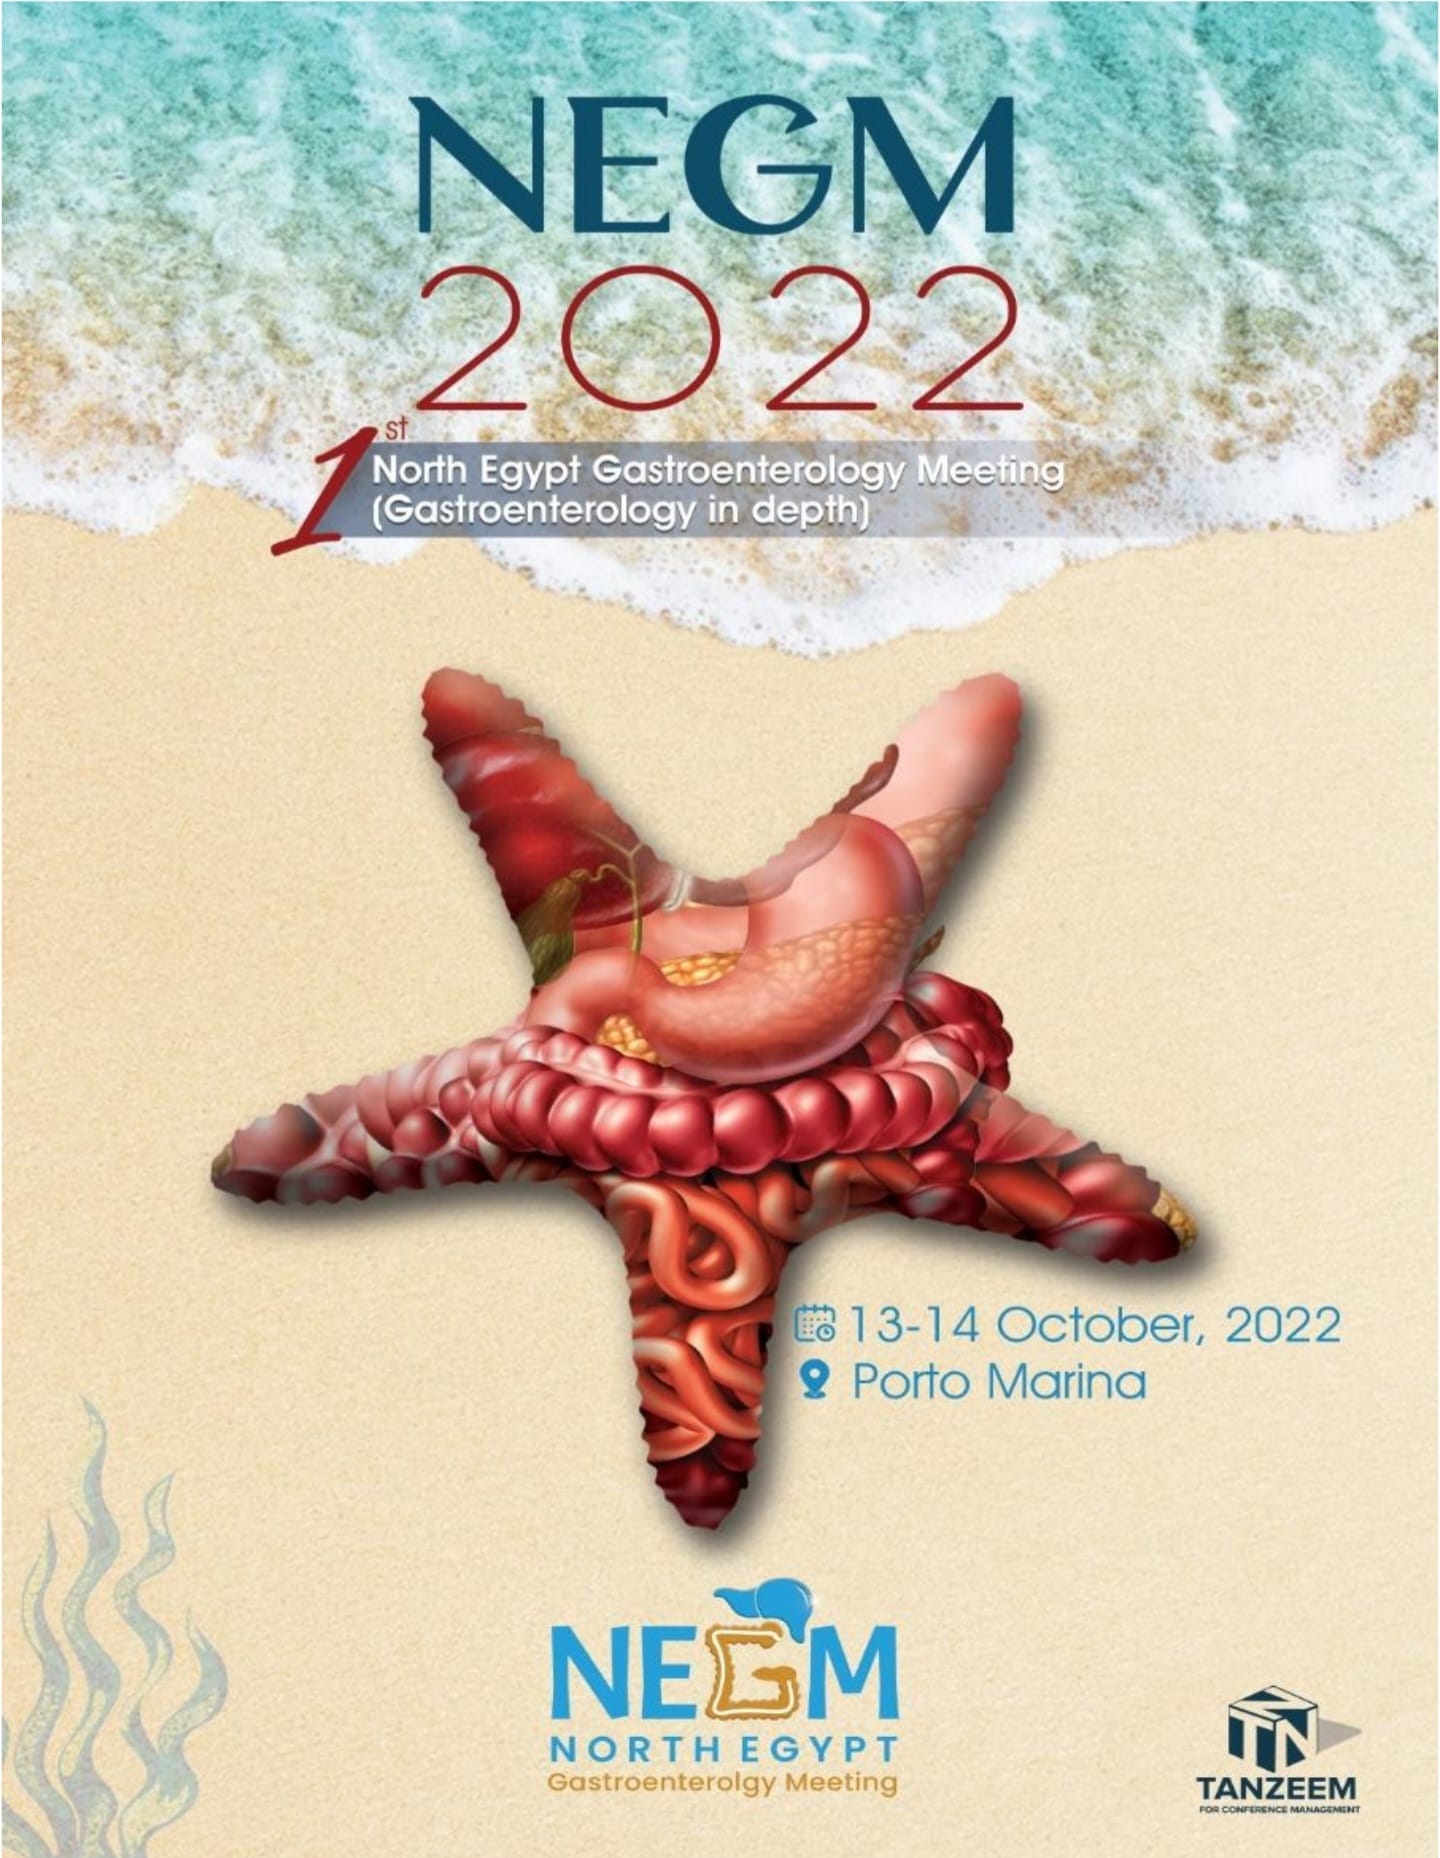 North Egypt Gastroenterology Meeting (Gastroenterology in depth) NEGM 2022